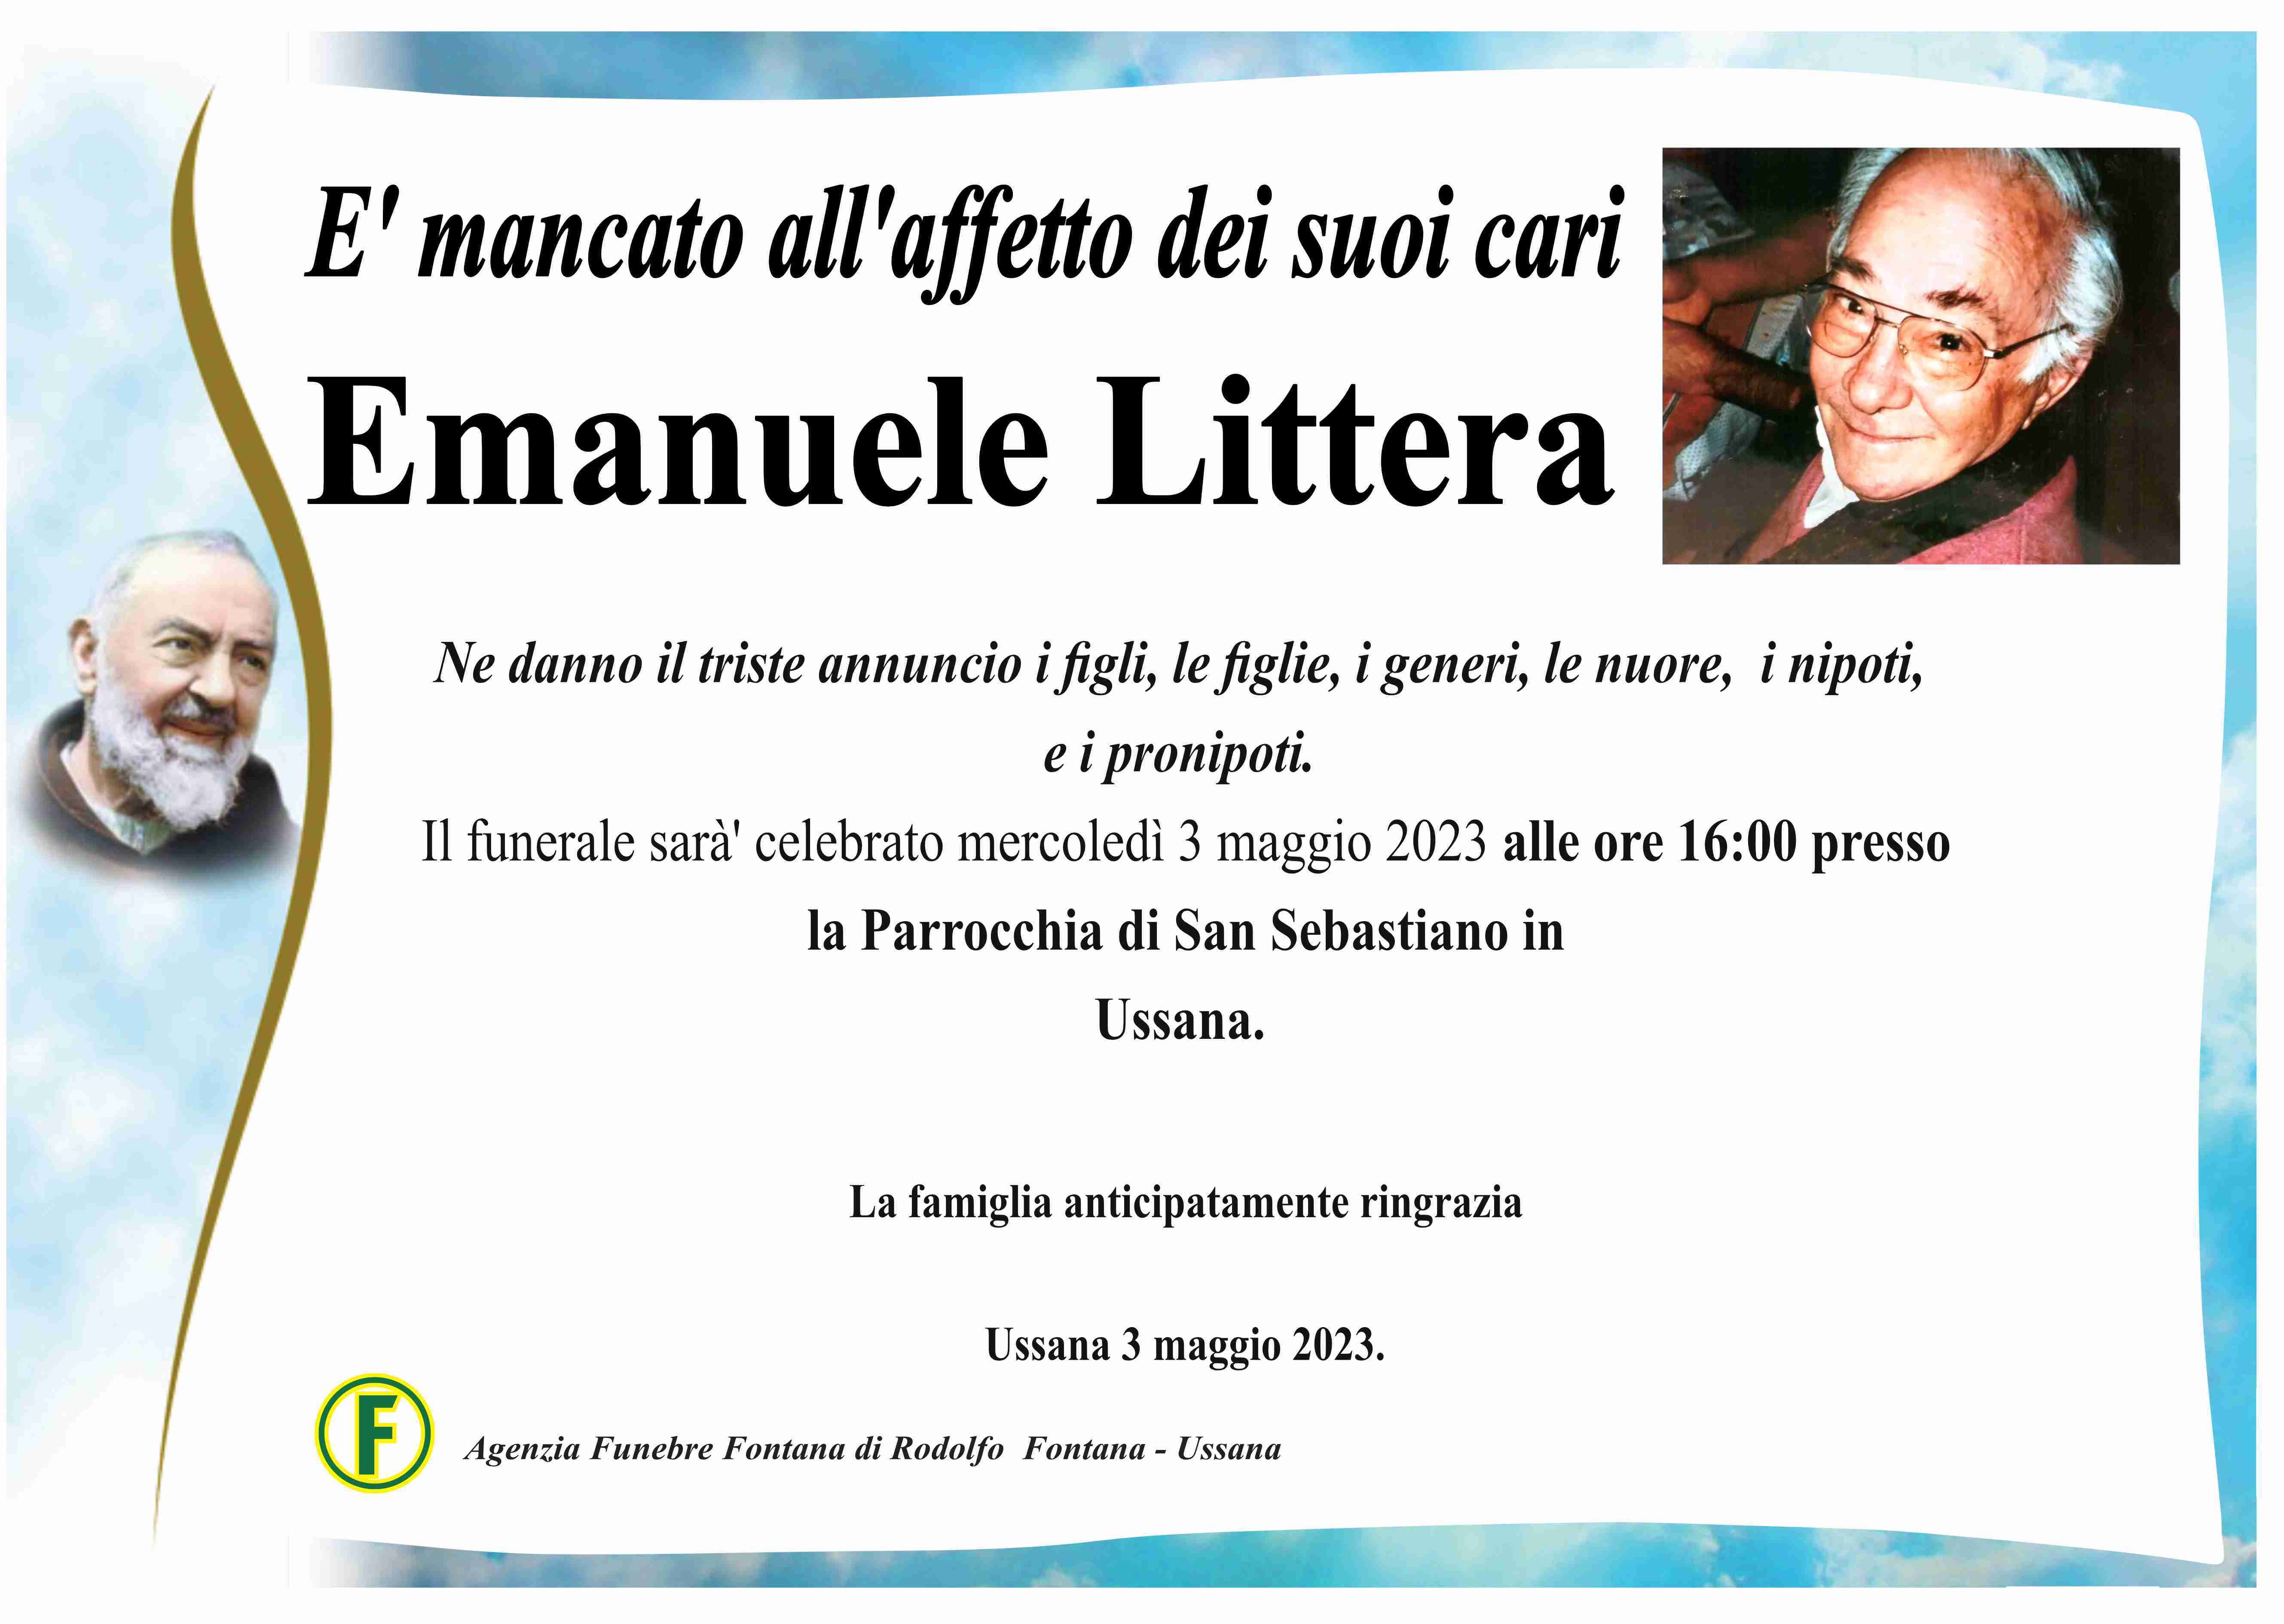 Emanuele Littera